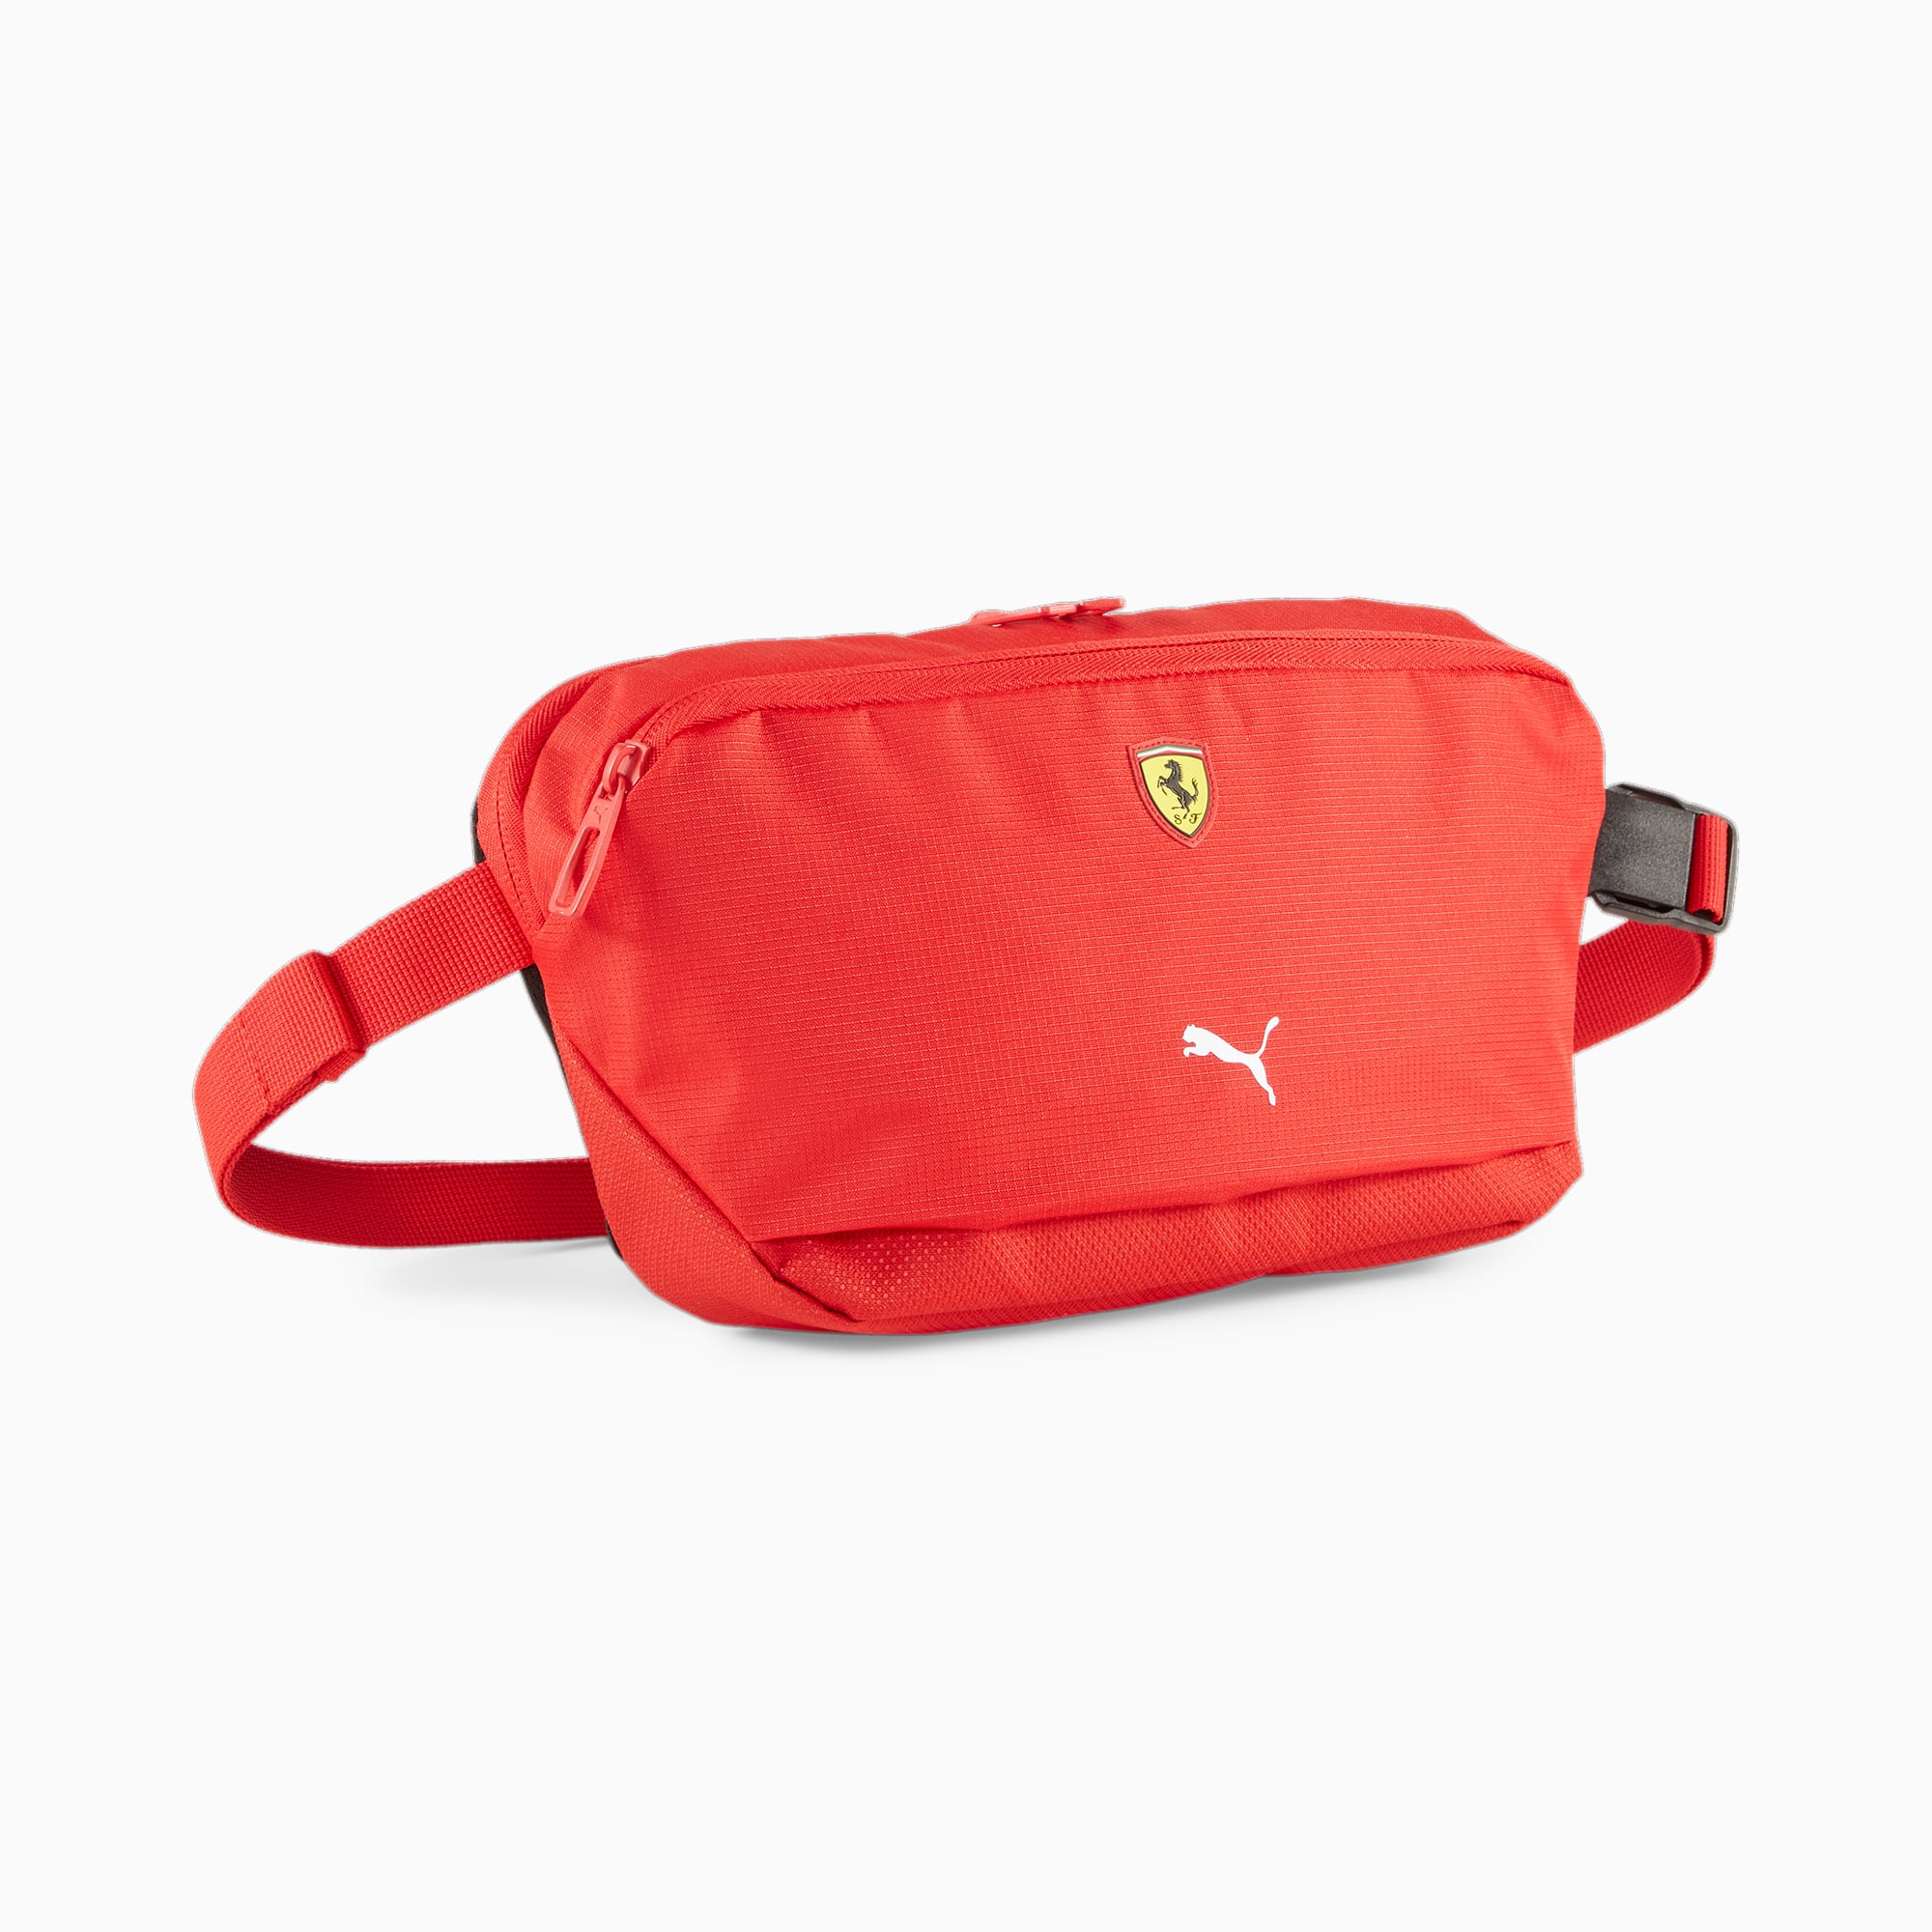 Women's PUMA Scuderia Ferrari Race Motorsport Waist Bag, Red, Accessories